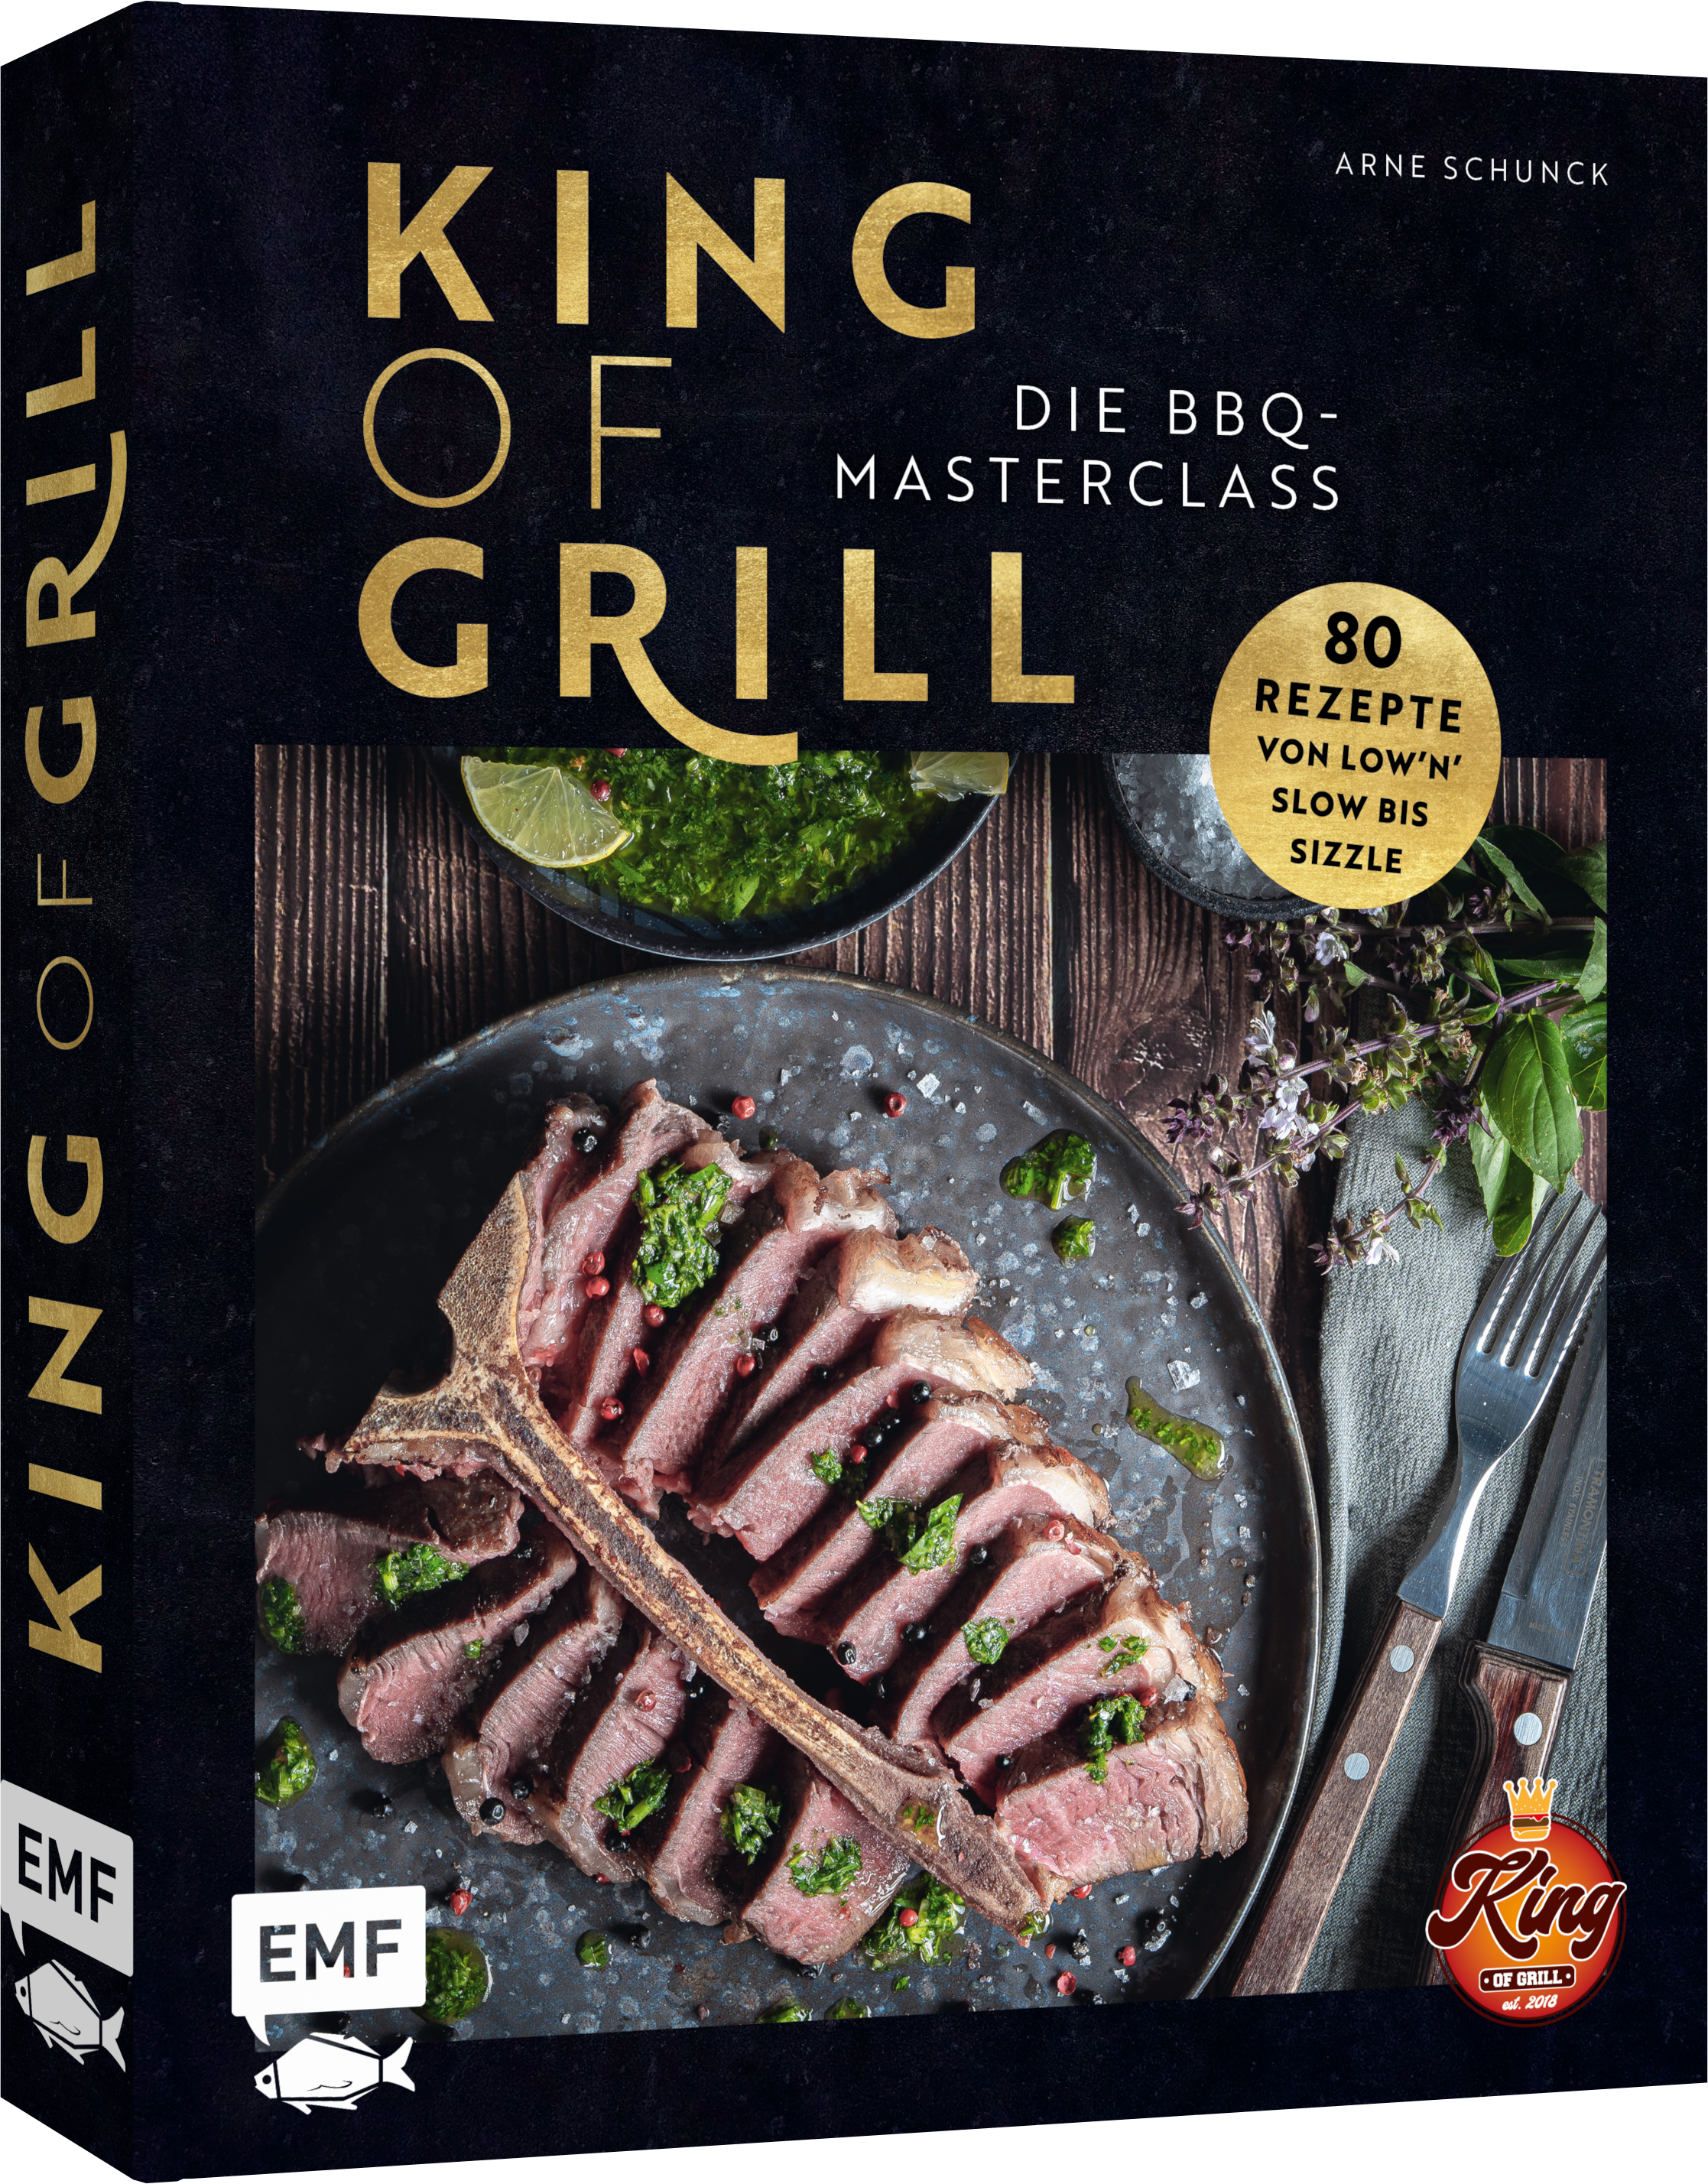 King of Grill – Die BBQ-Masterclass